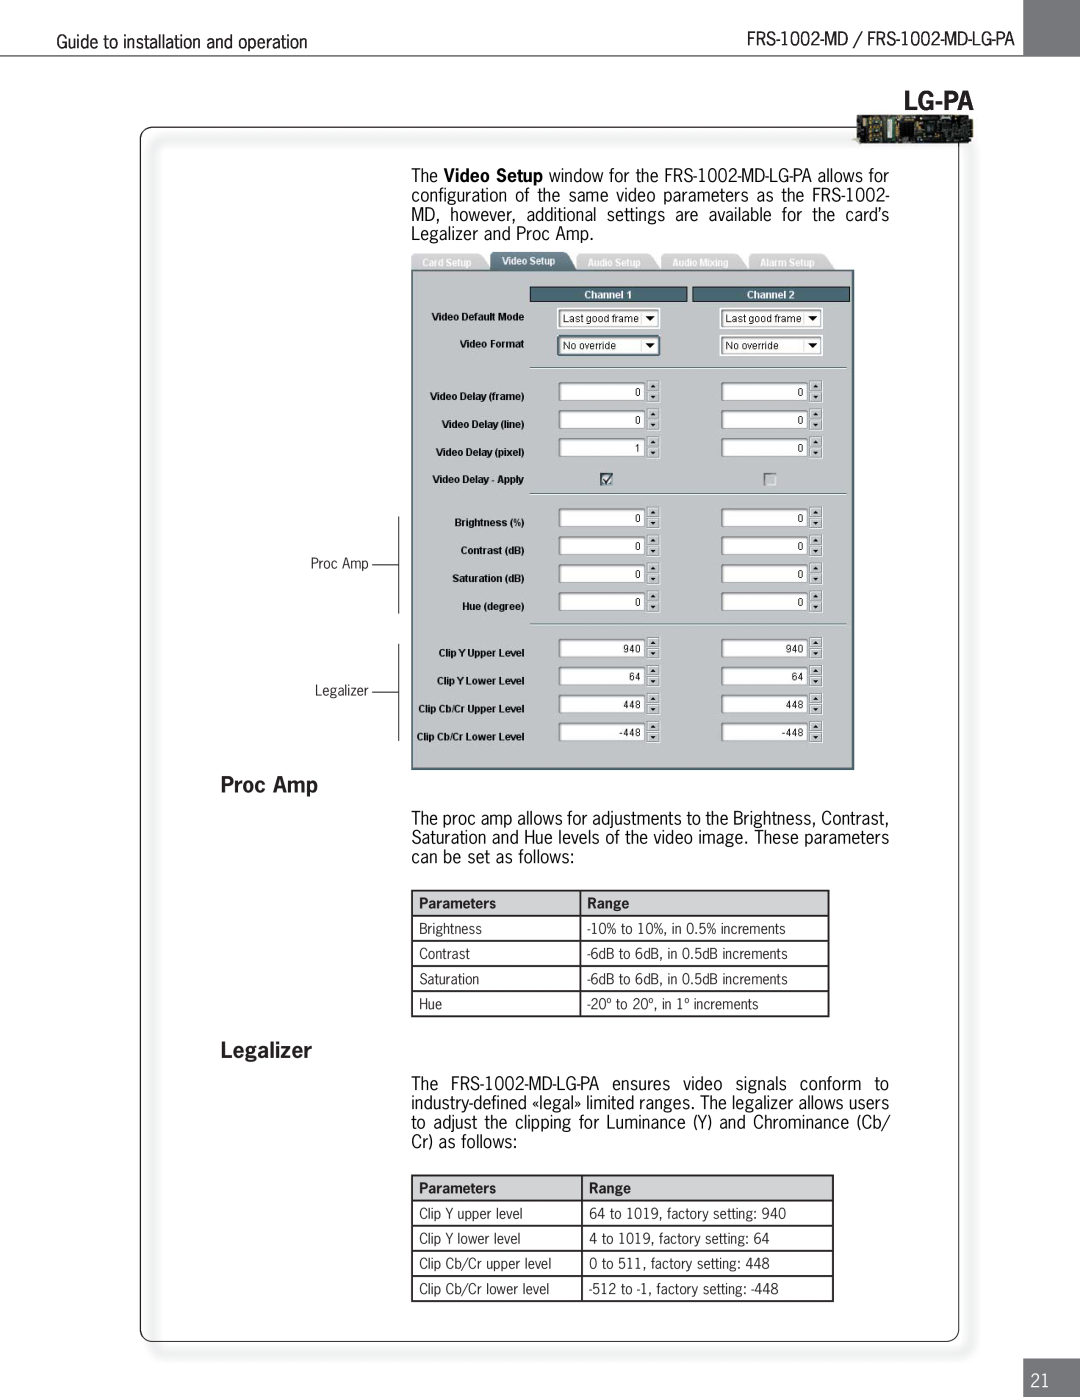 Algolith FRS-1002-MD operation manual Proc Amp, Legalizer, Lg-Pa, Parameters, Range 